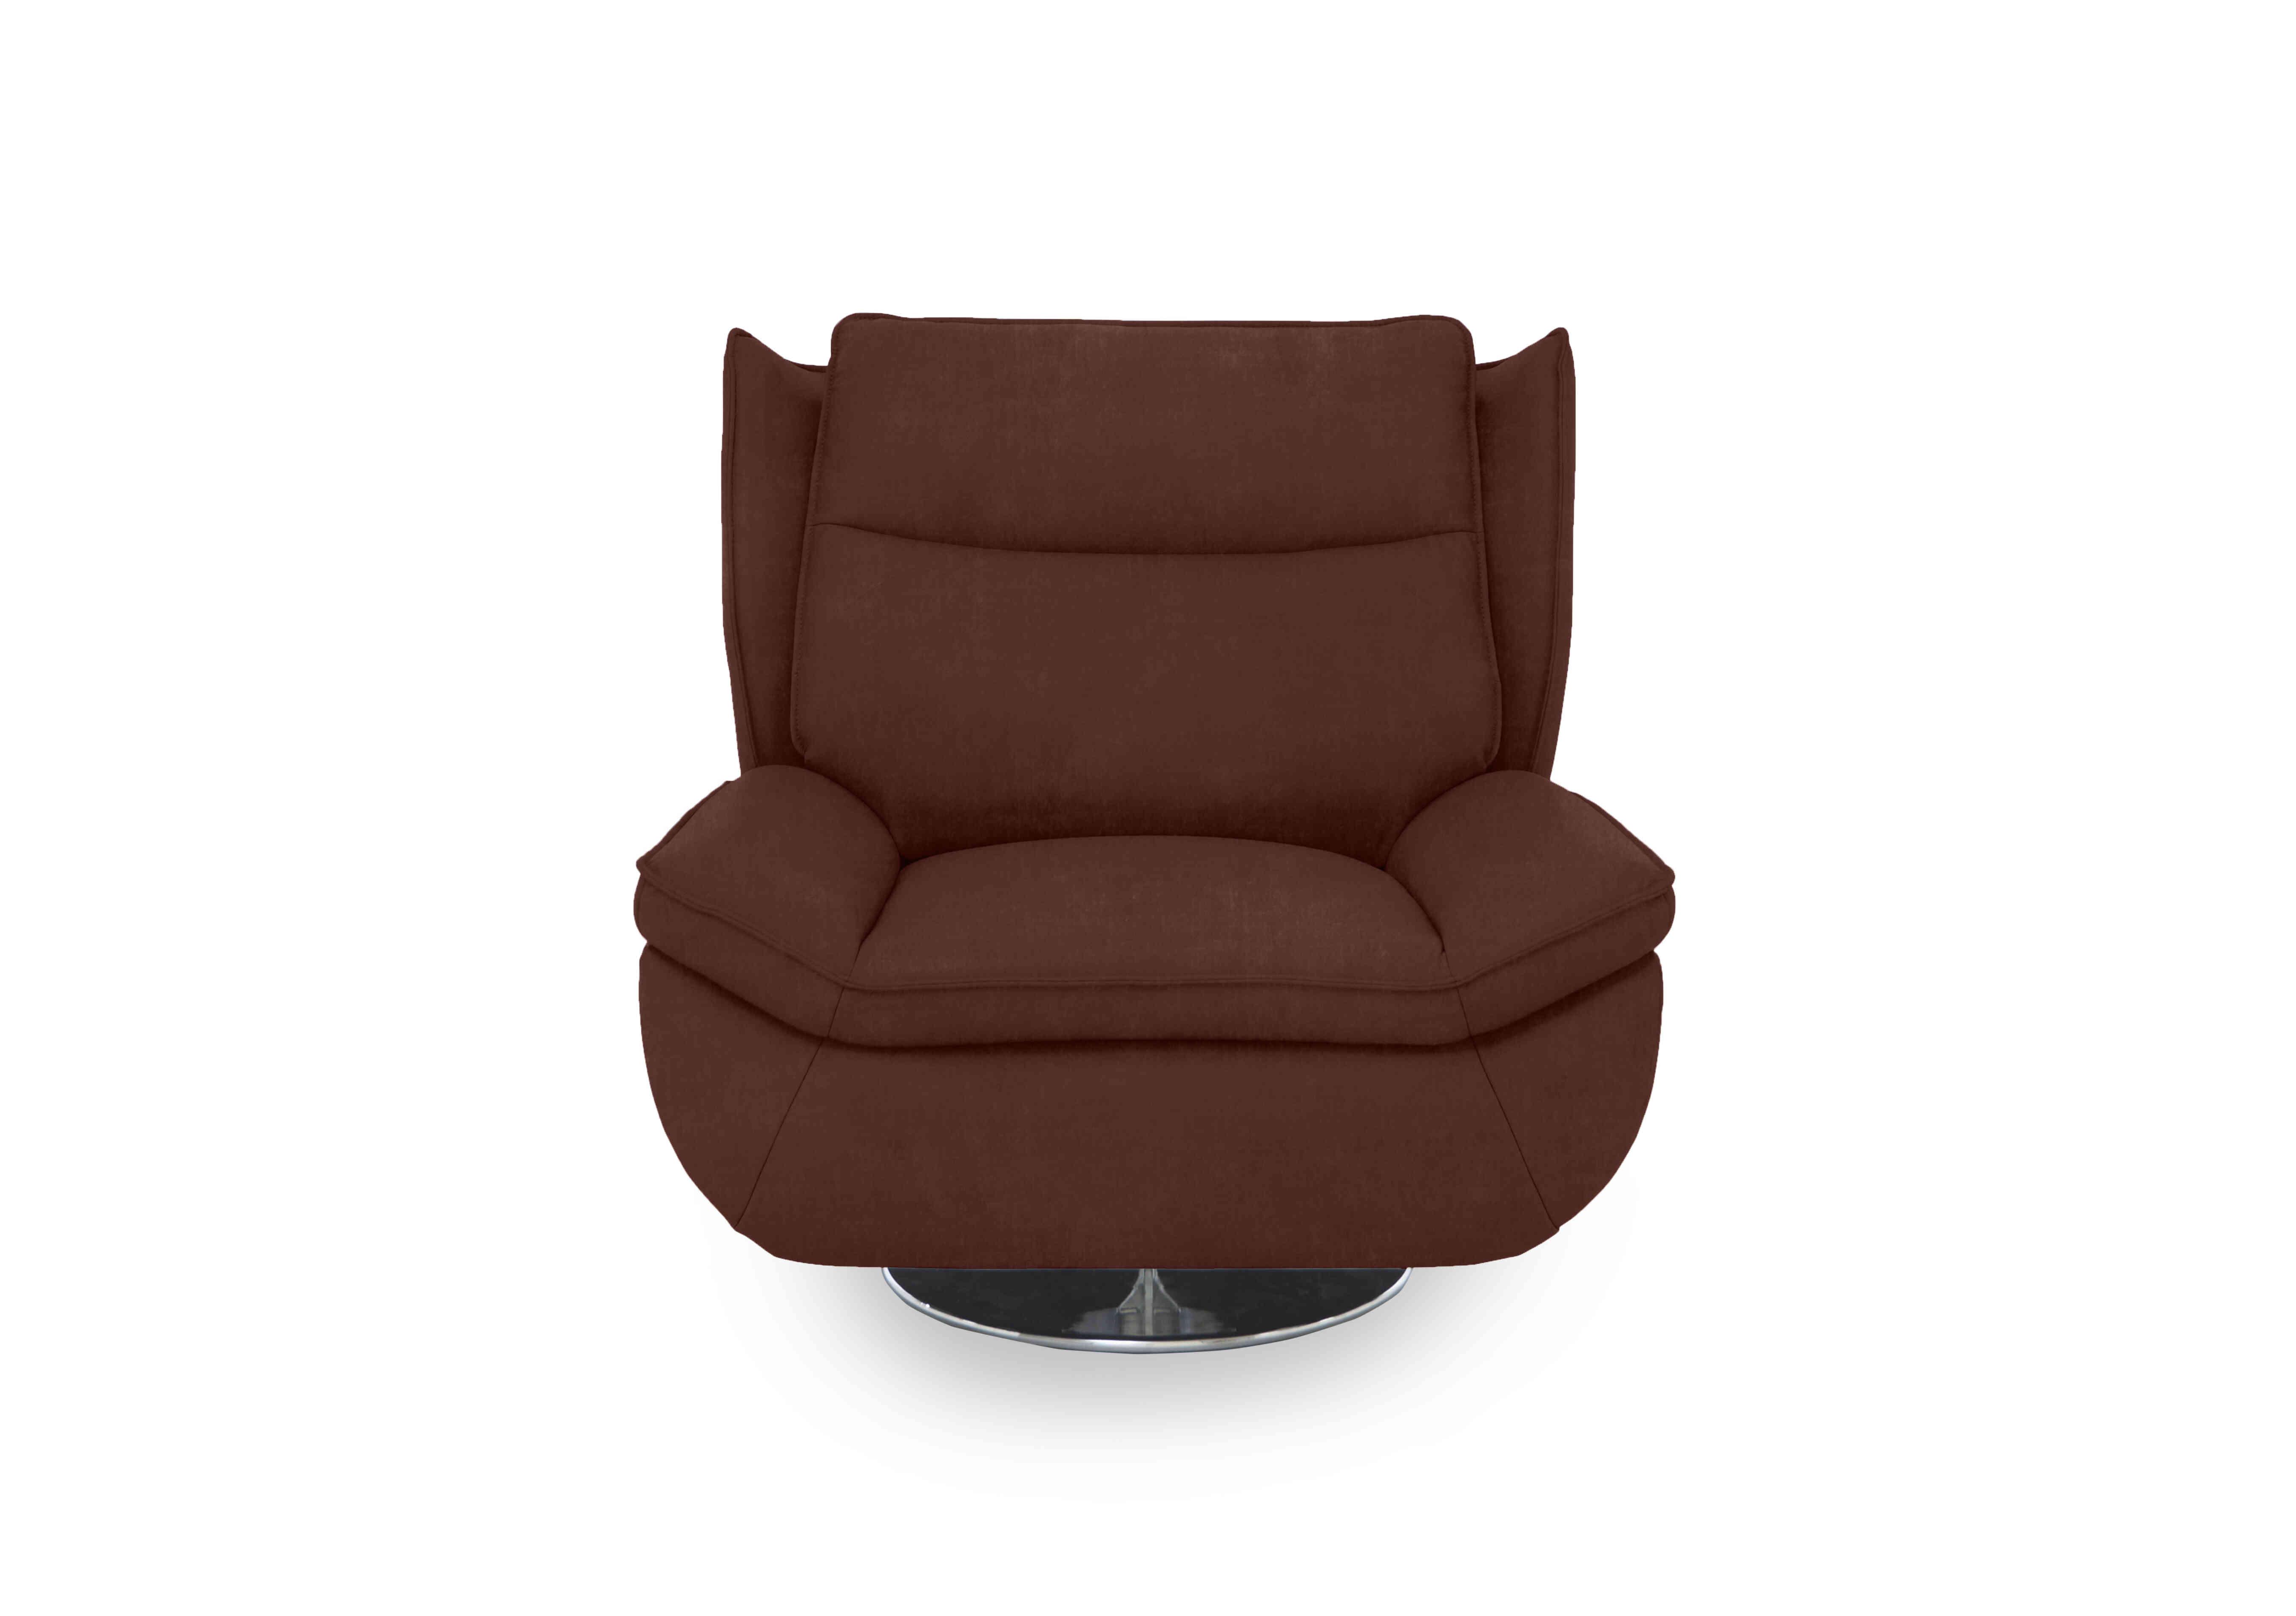 Vinny Fabric Swivel Chair in 58008 Manhattan Burnt Sienna on Furniture Village